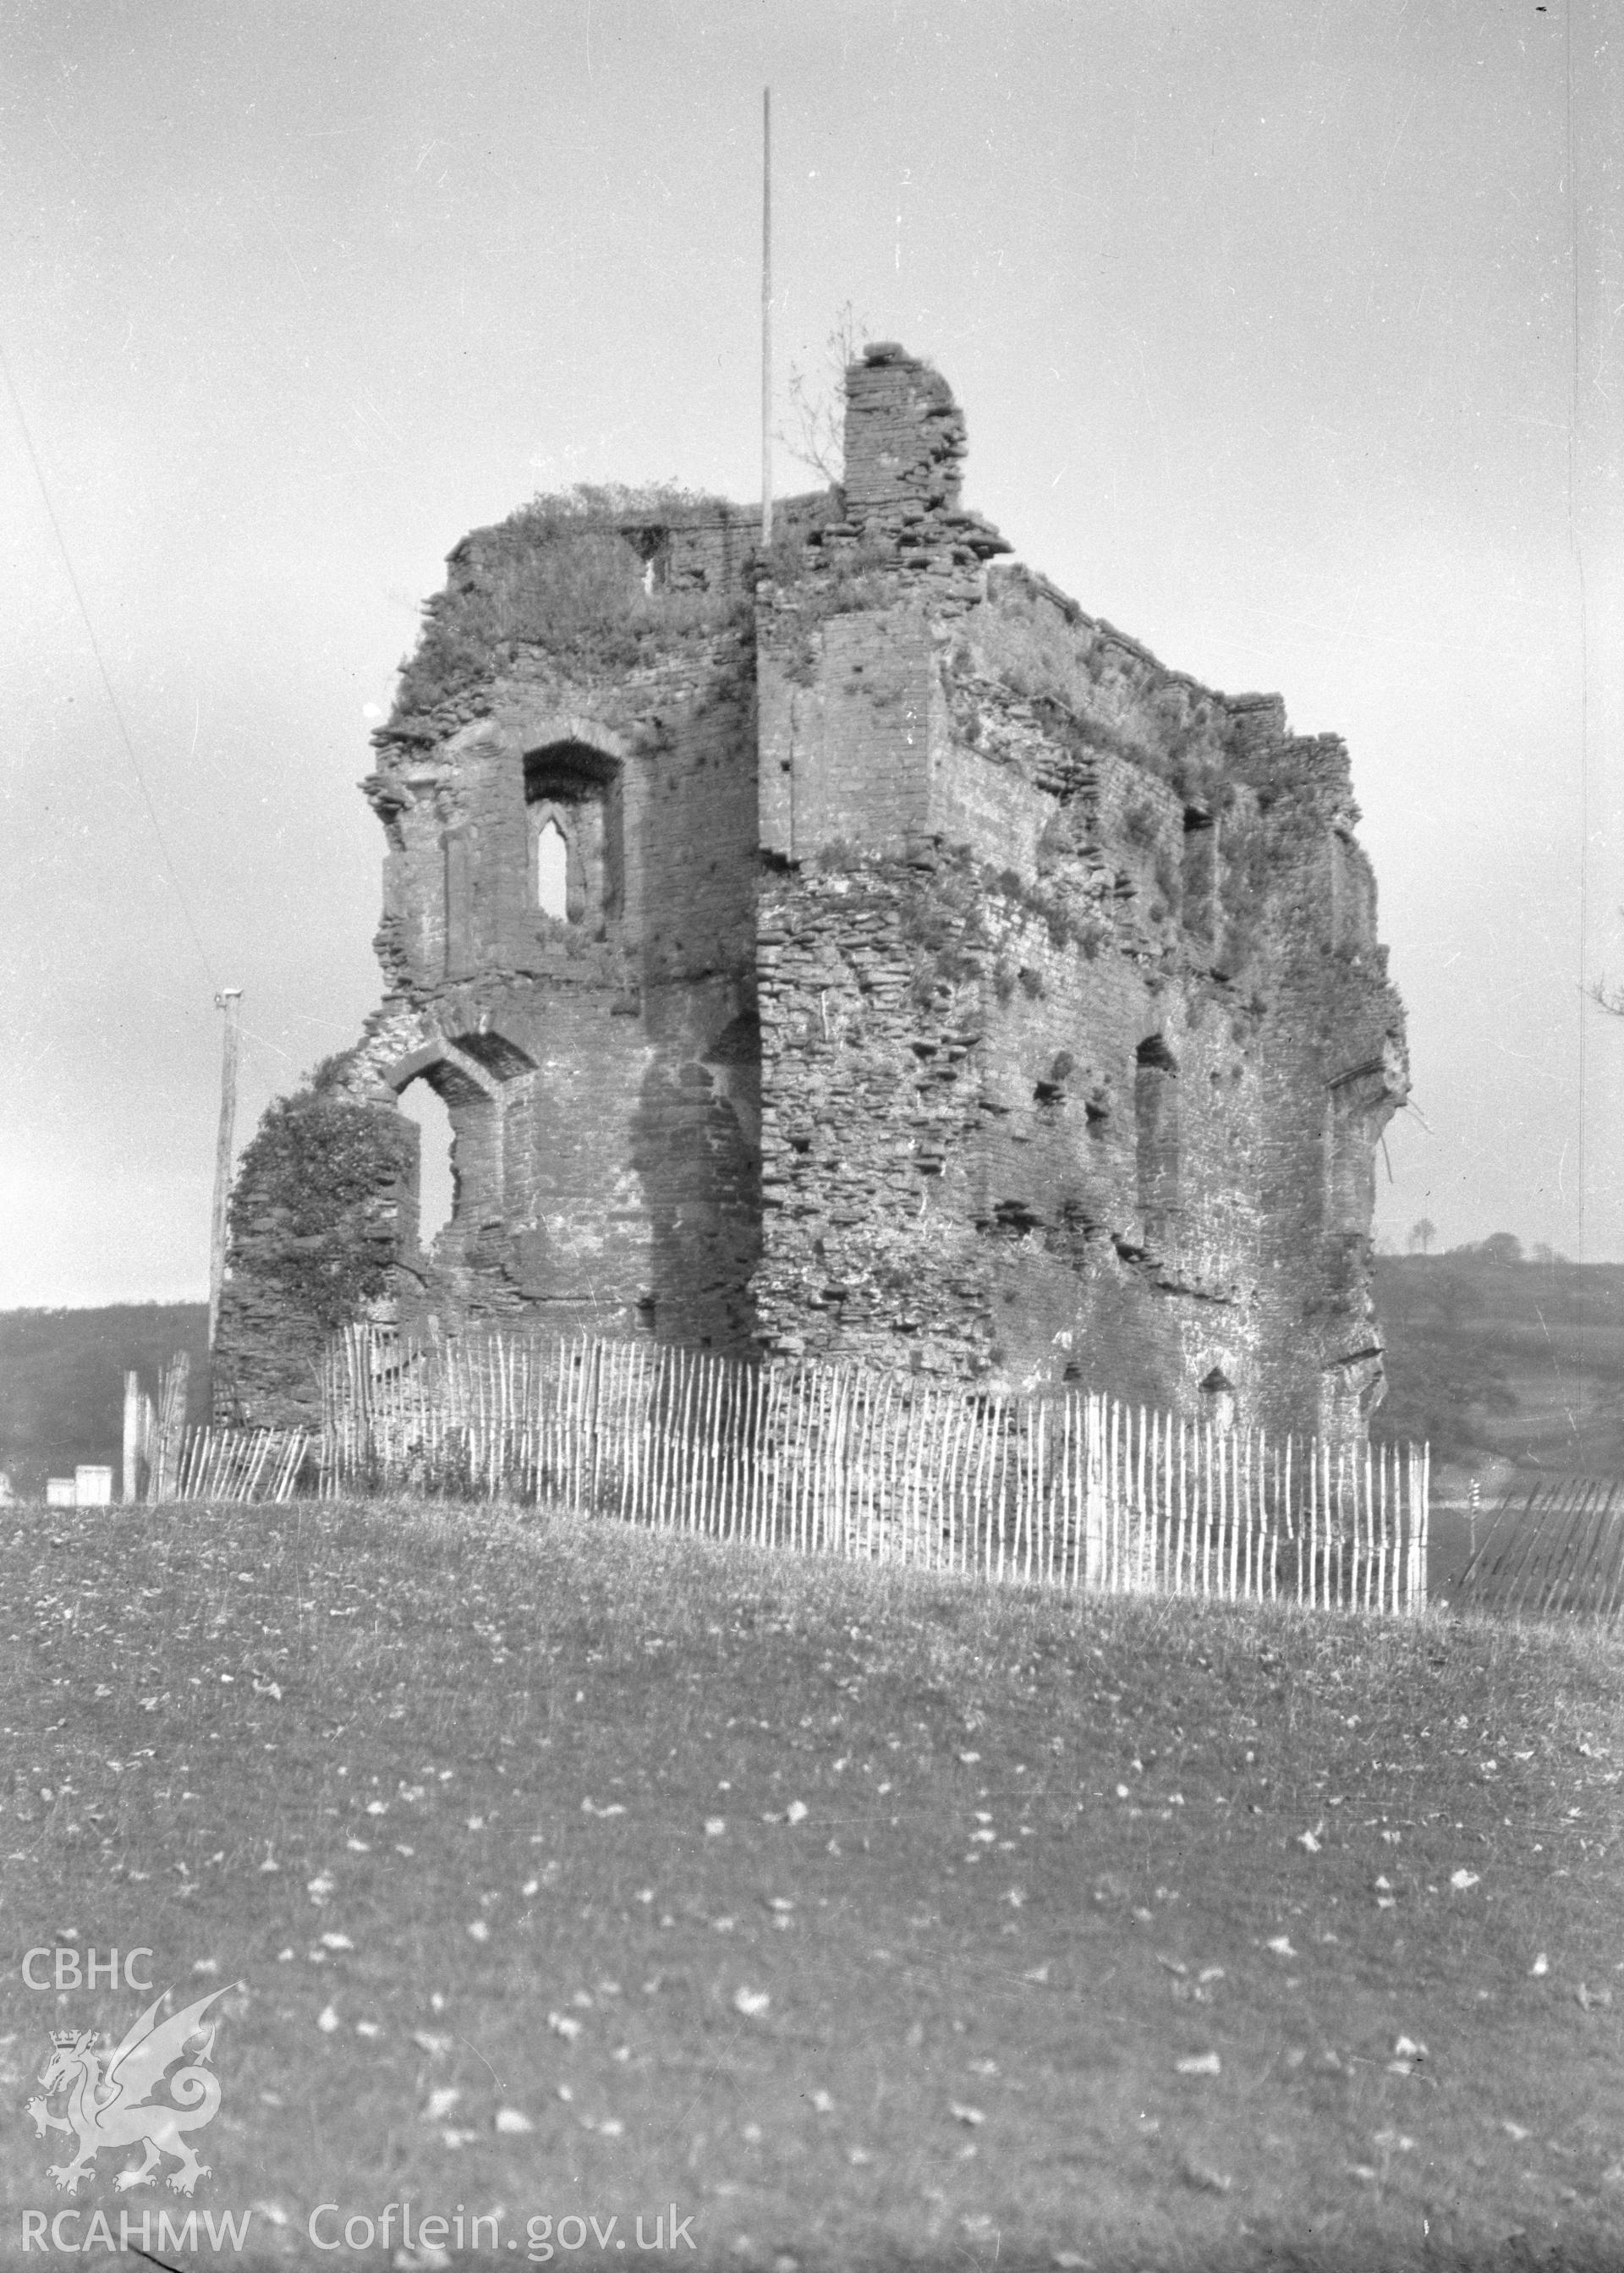 Digital copy of a nitrate negative showing Alisby's Castle, Crickhowell.